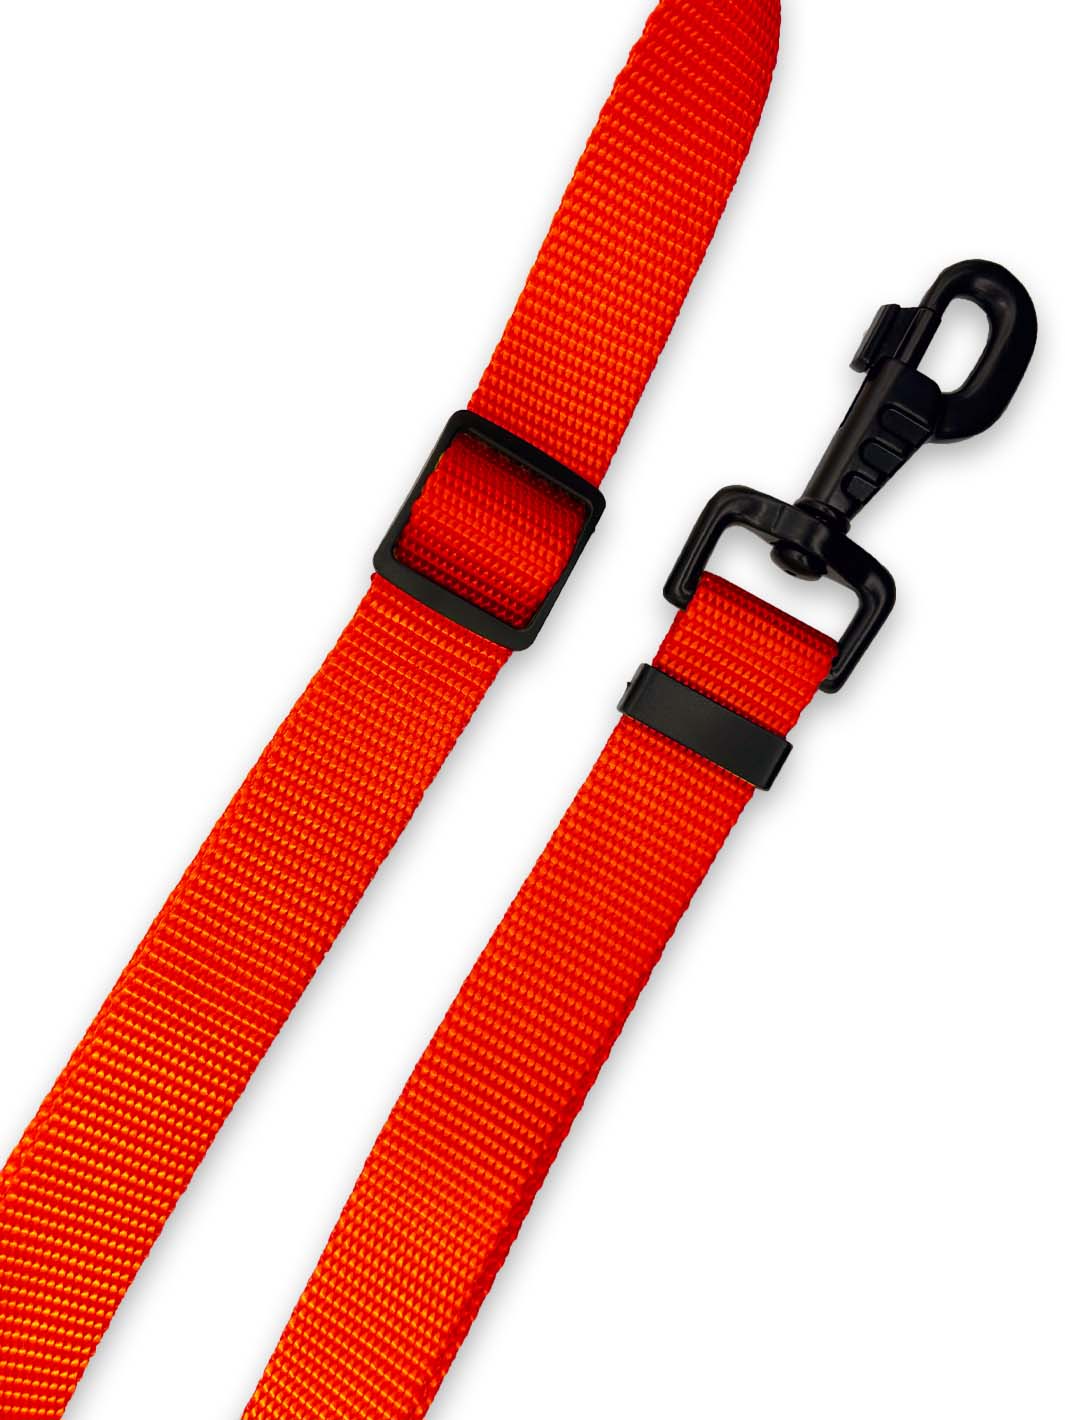 Neon orange nylon strap webbing dog leash clip by MAGNUS Canis.